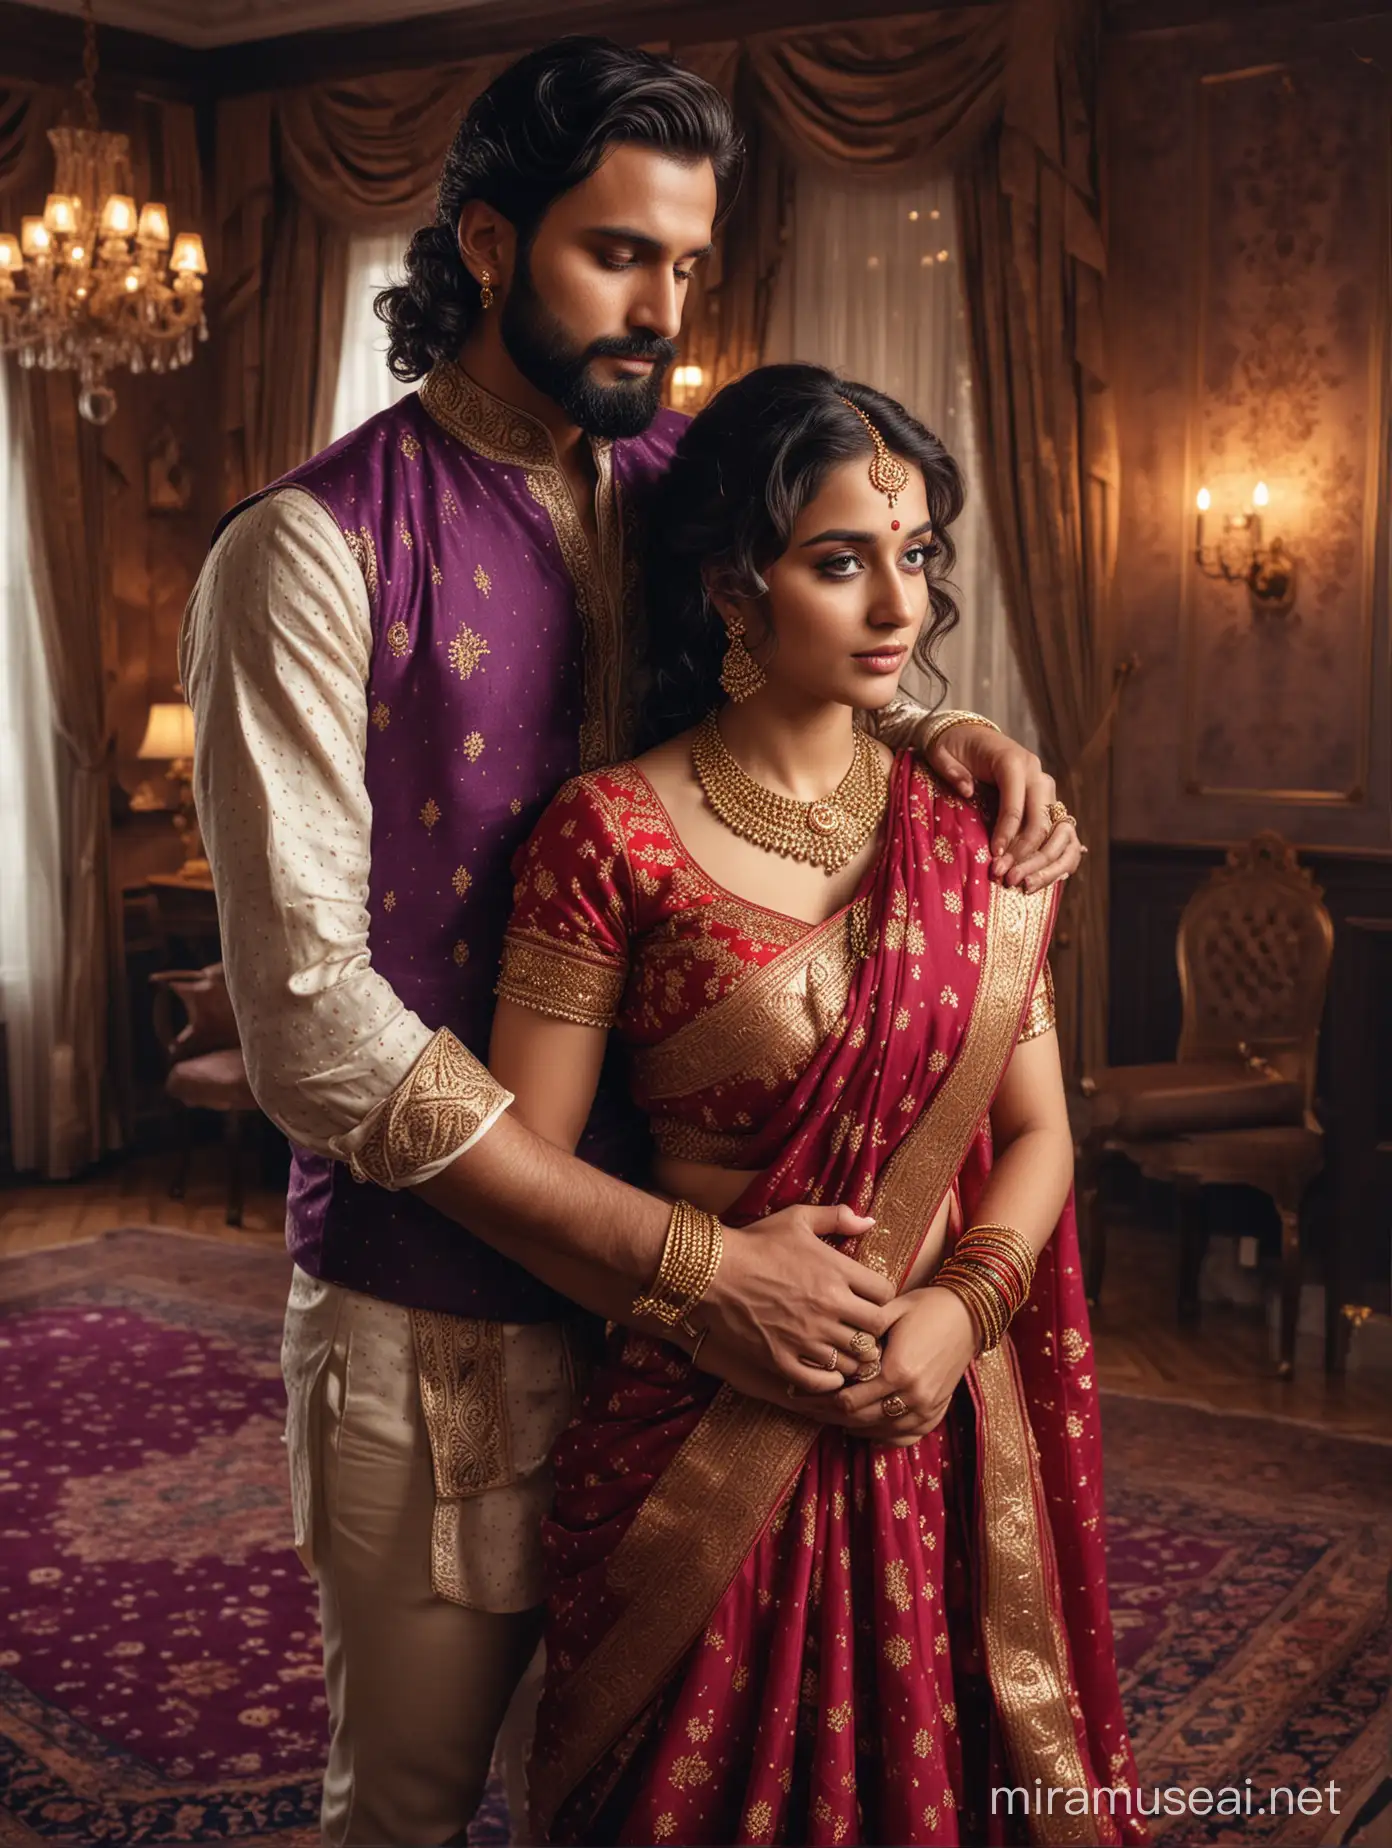 Beautiful Indian Couple in Saree Embracing in Romantic Palace Setting